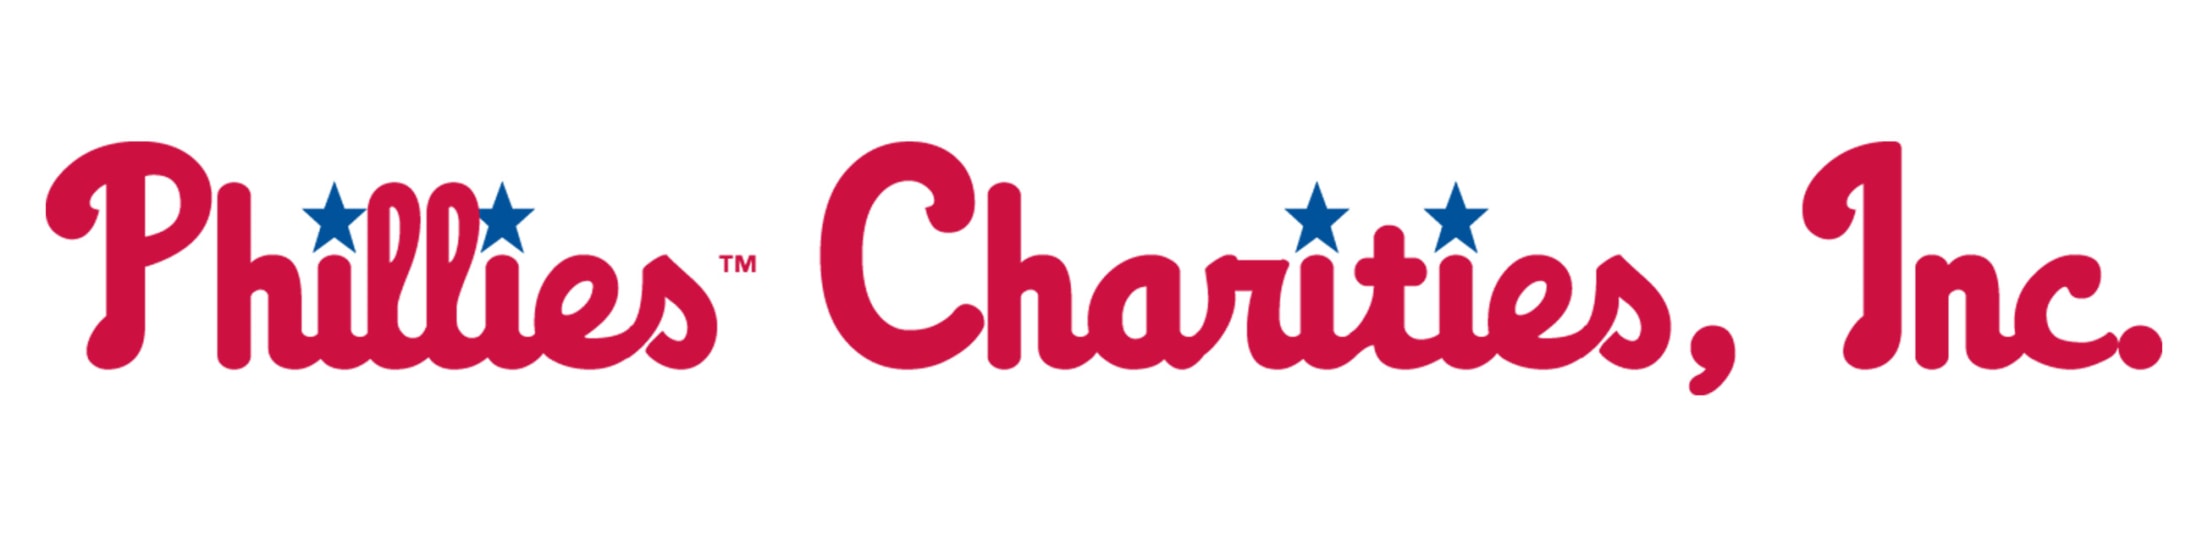 Phillies Charities, Inc. Philadelphia Phillies